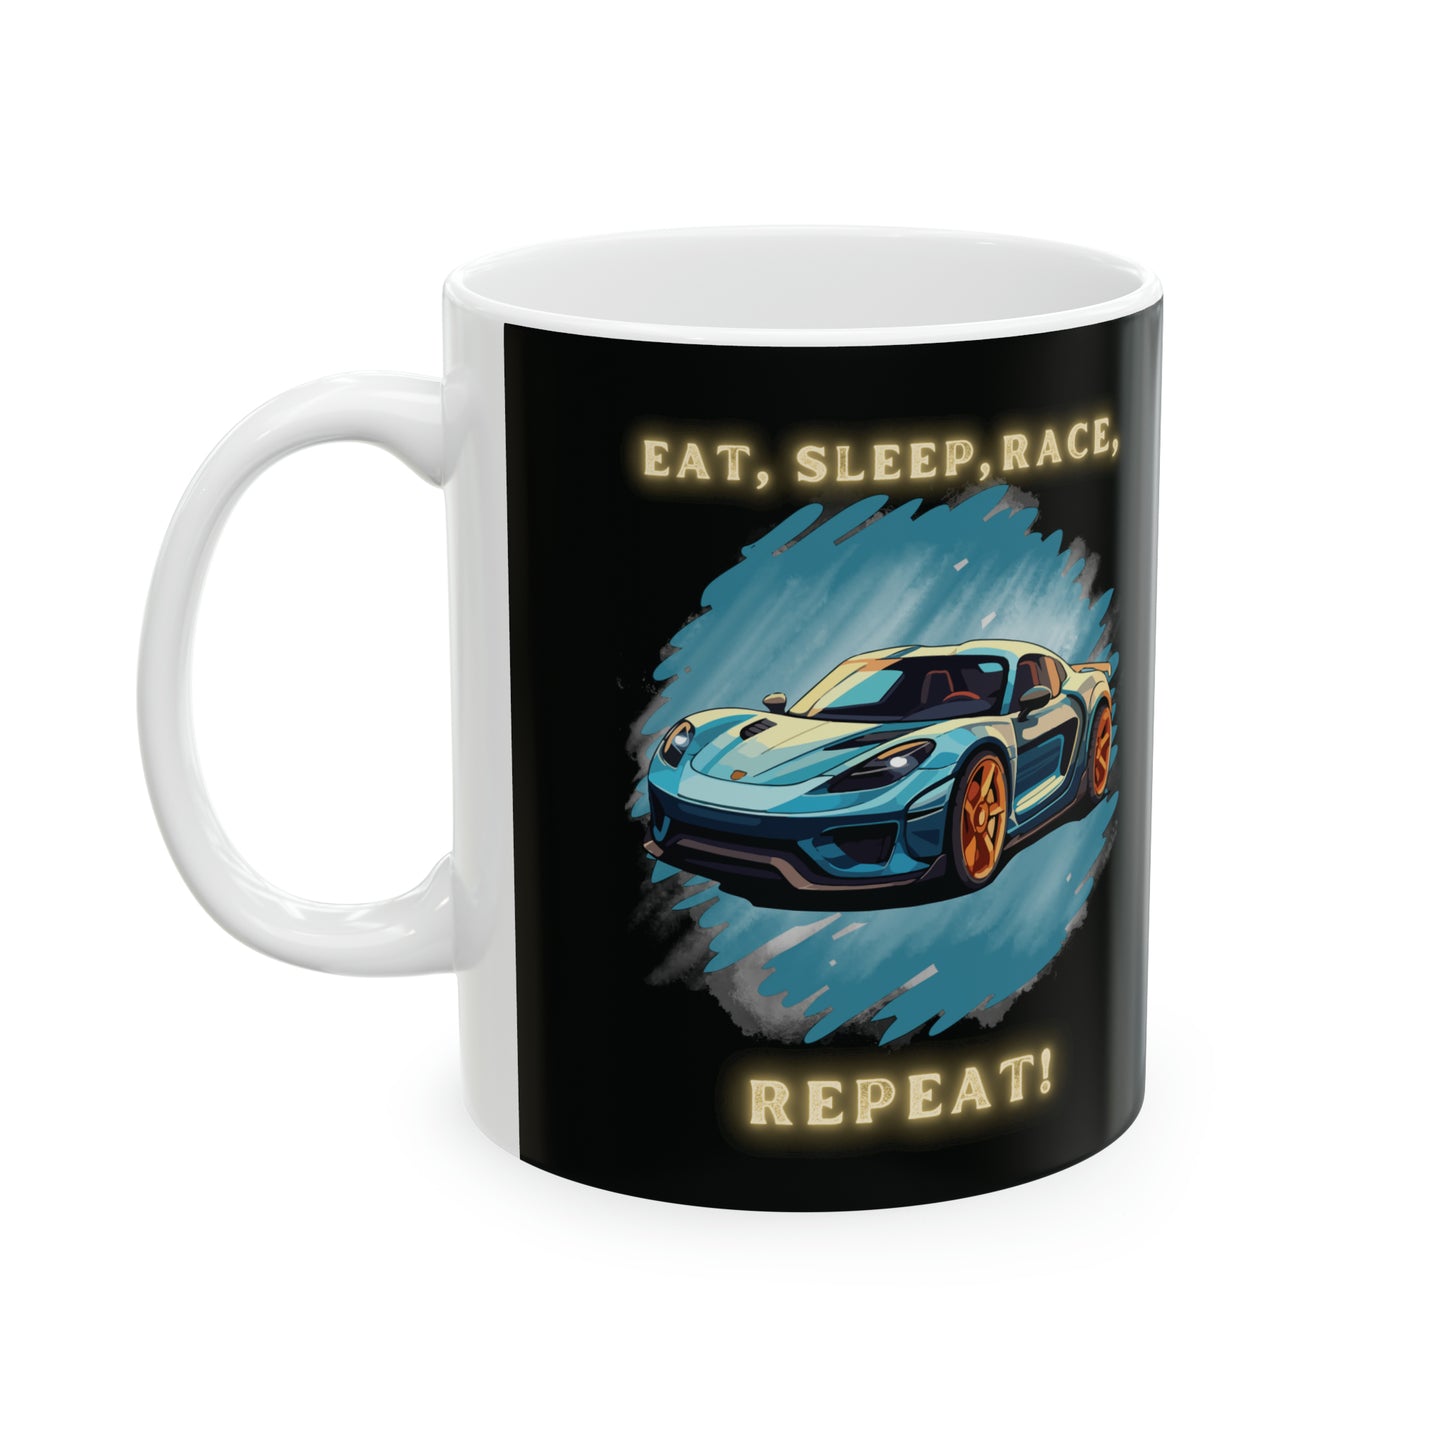 Ceramic Mug, 11oz - Eat, Sleep, Race, Repeat